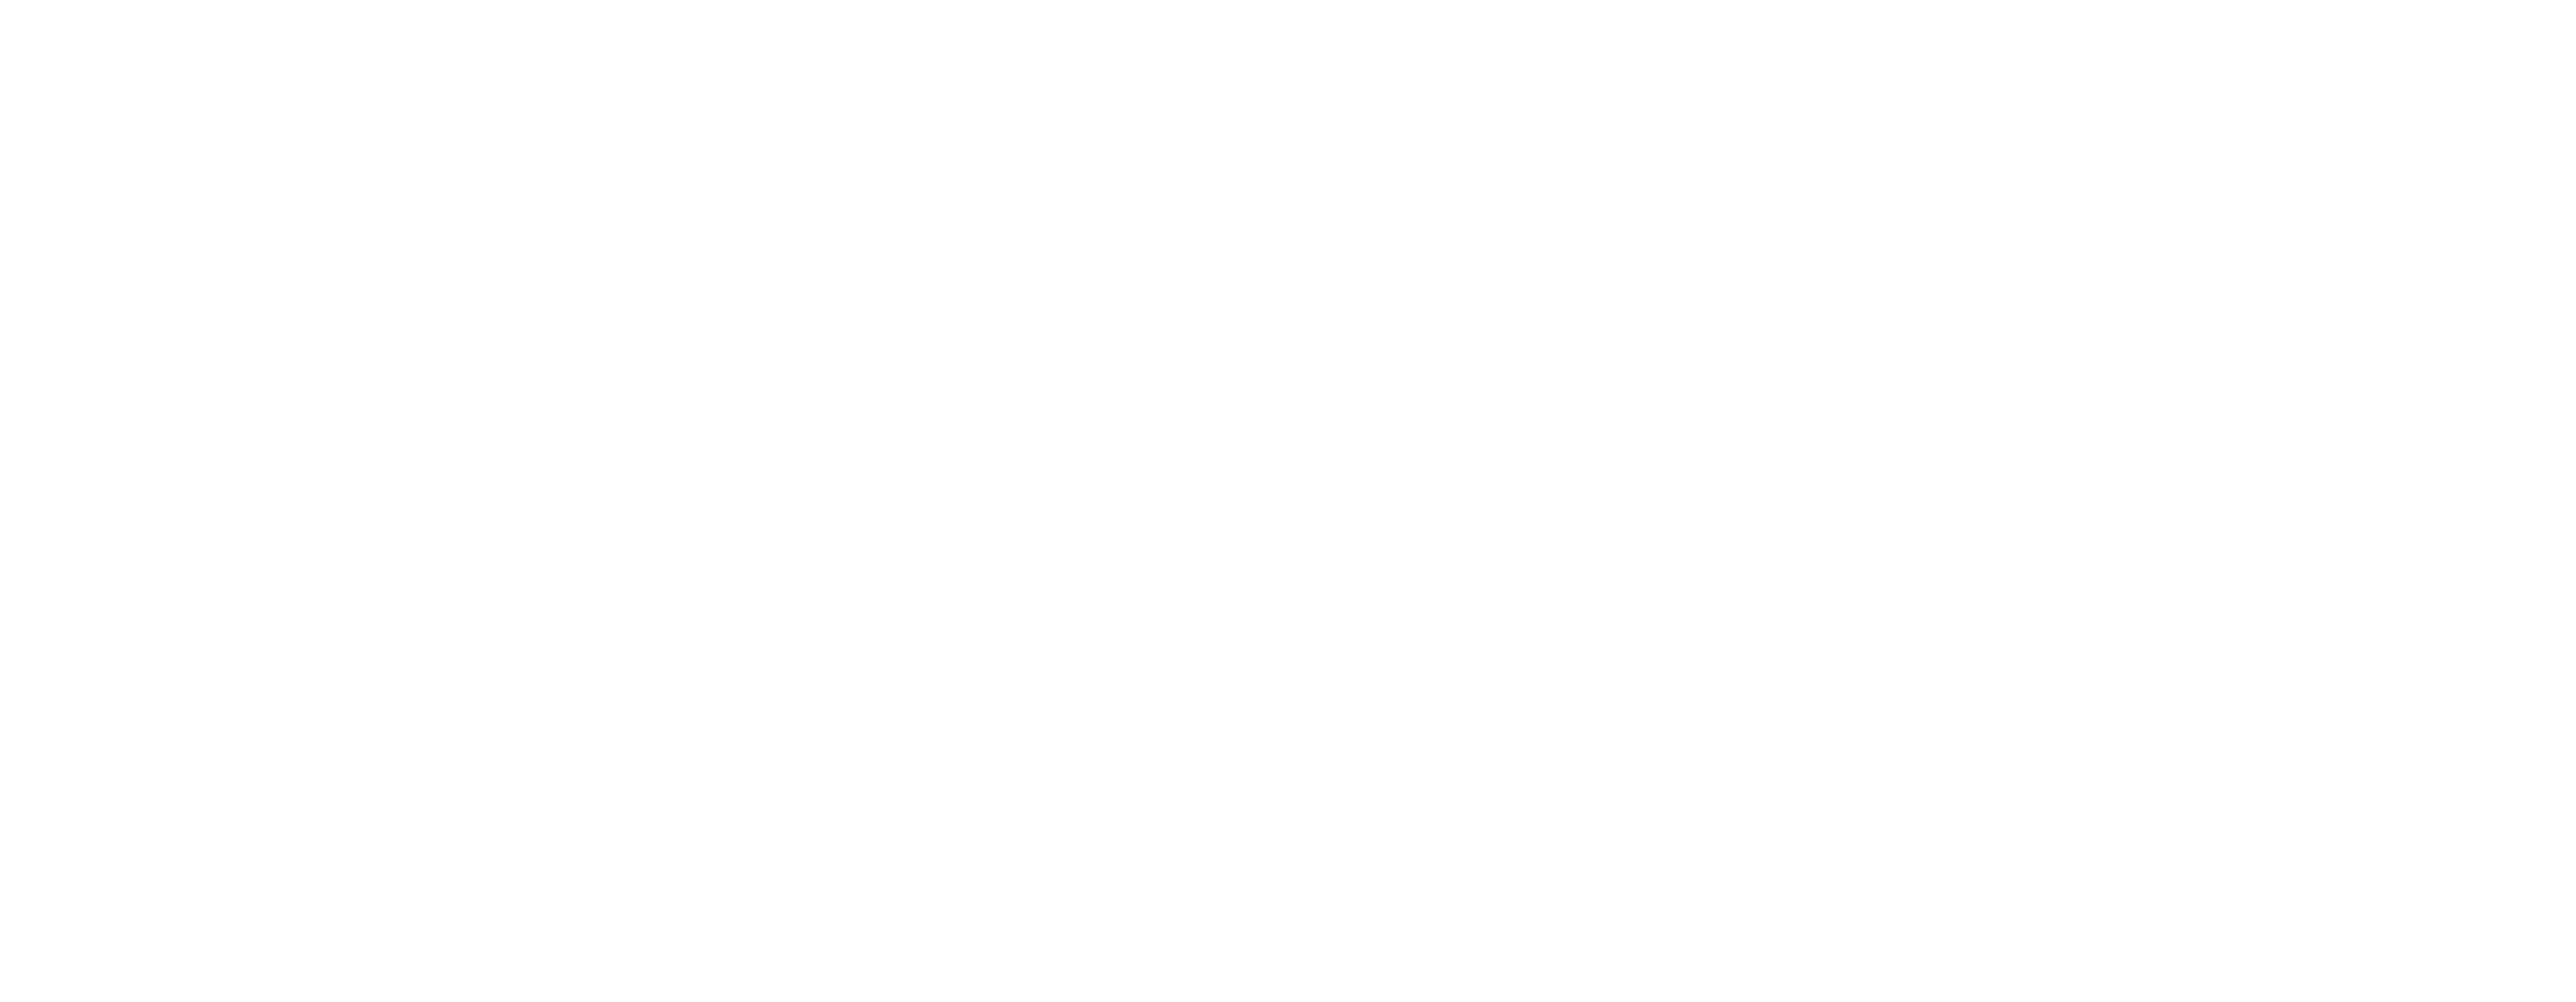 Logo-studioterracotta-blanc